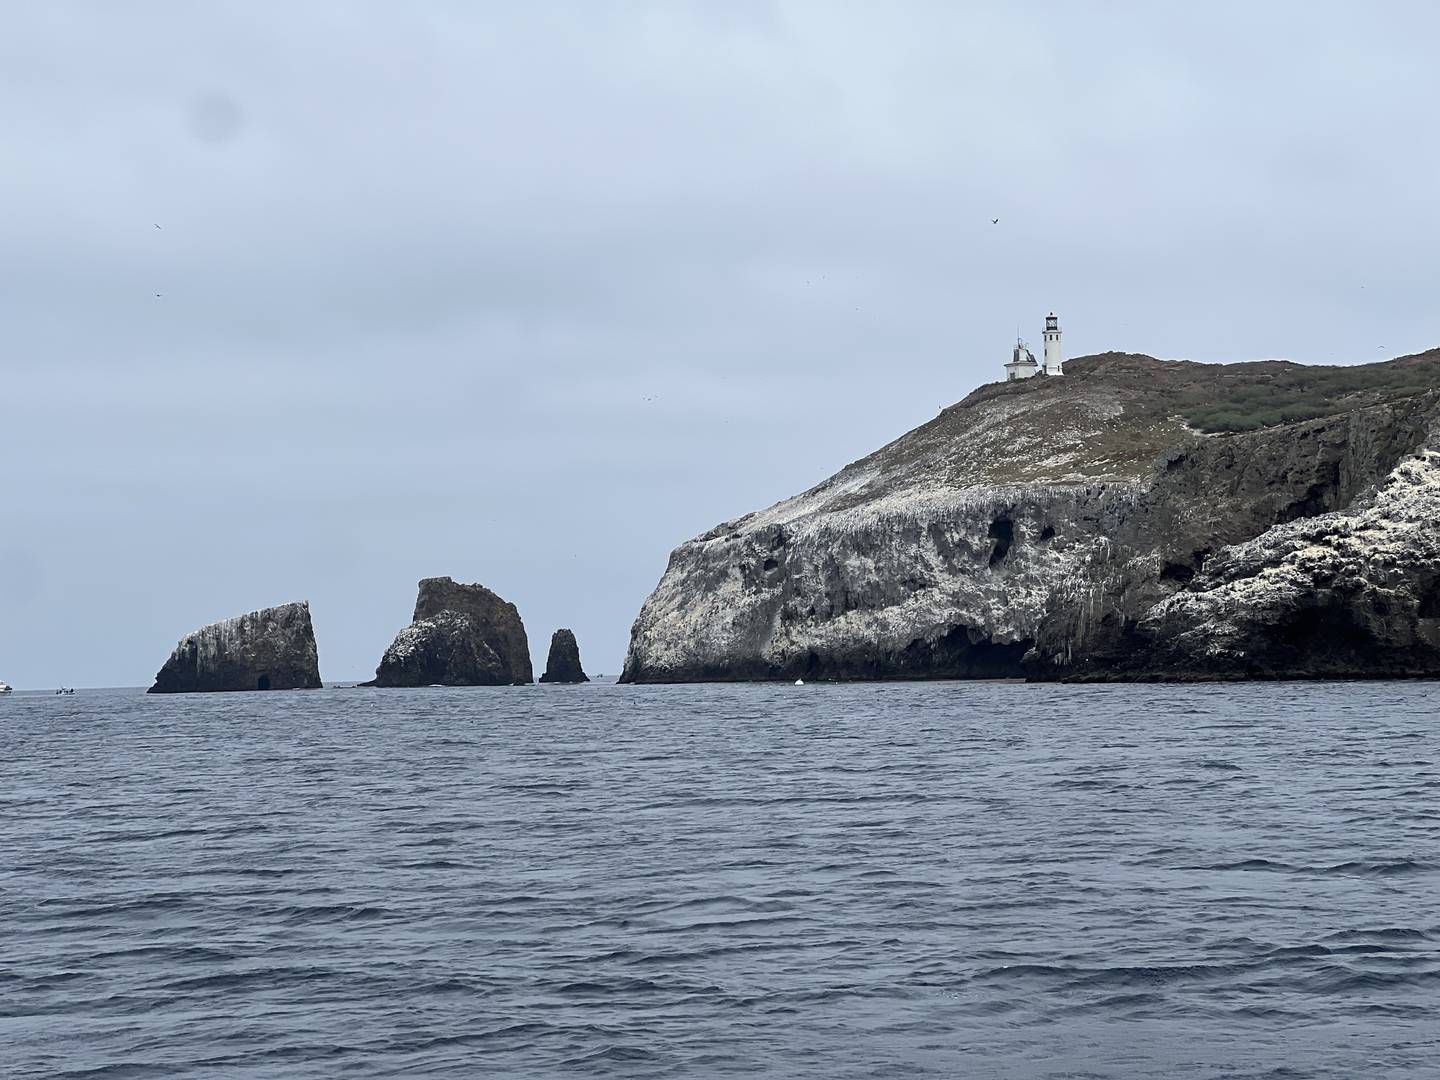 The lighthouse on Anacapa Island.